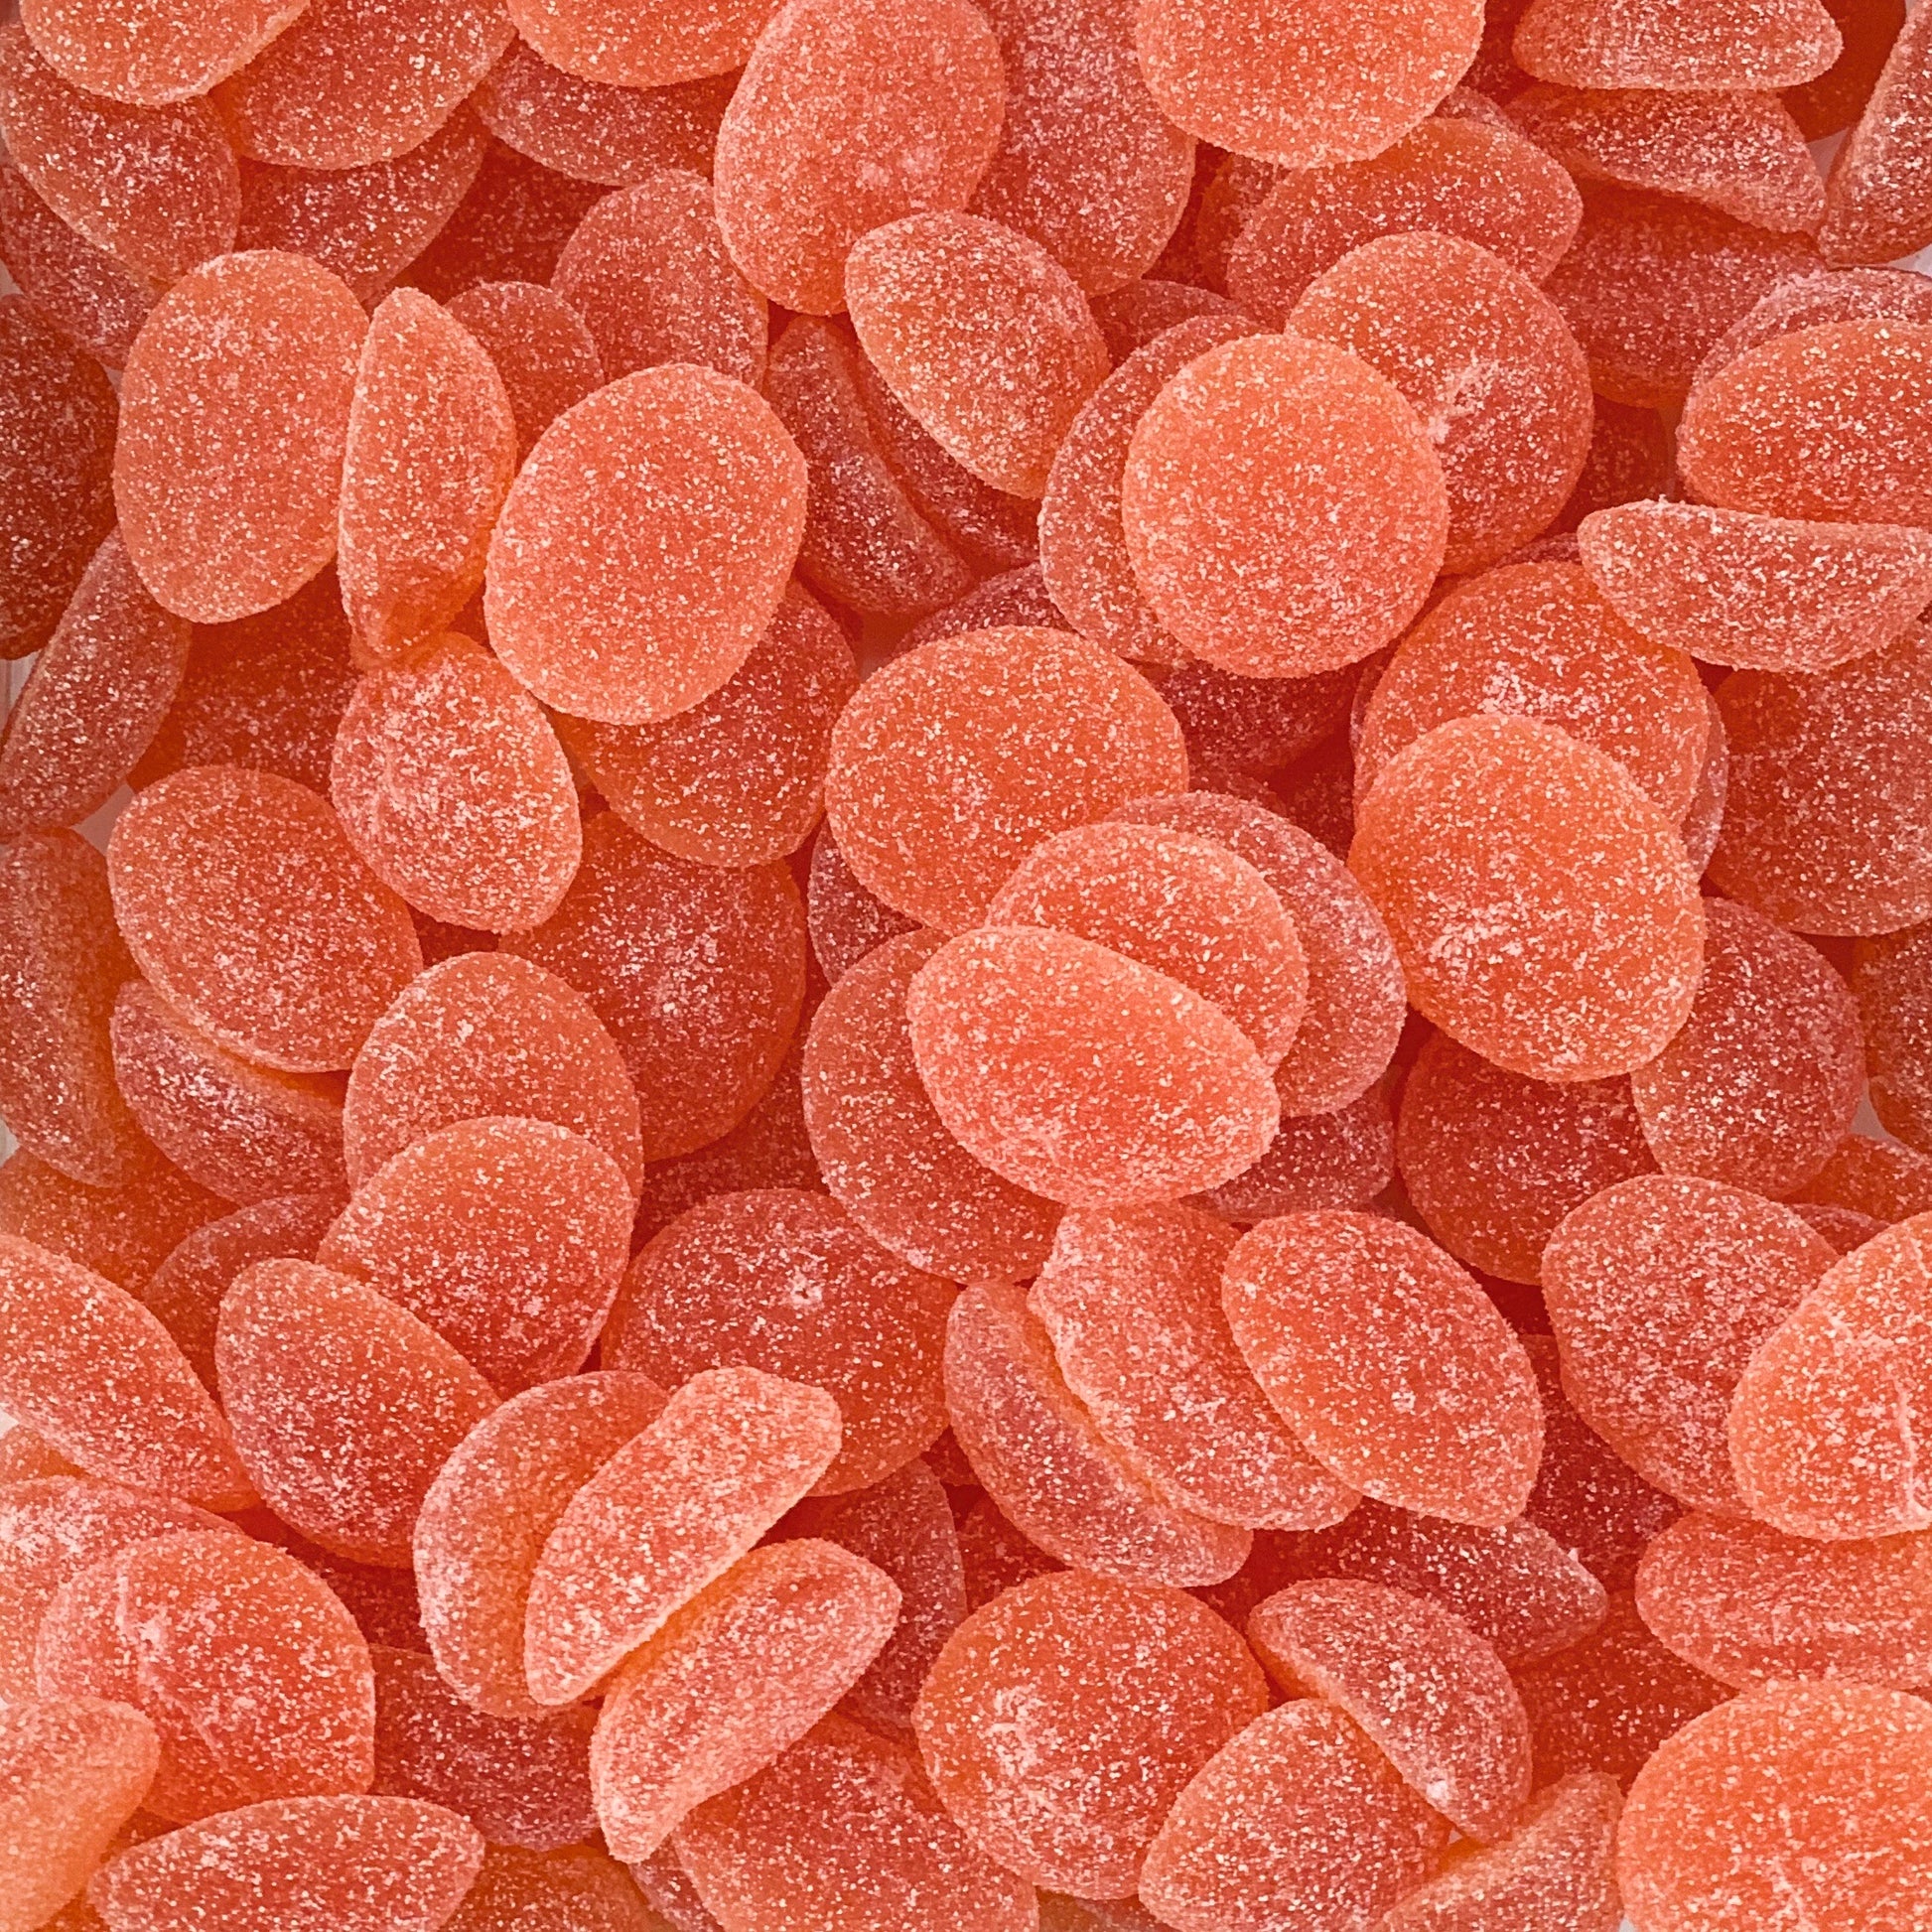 Soft Peaches Sockerbit swedish candy